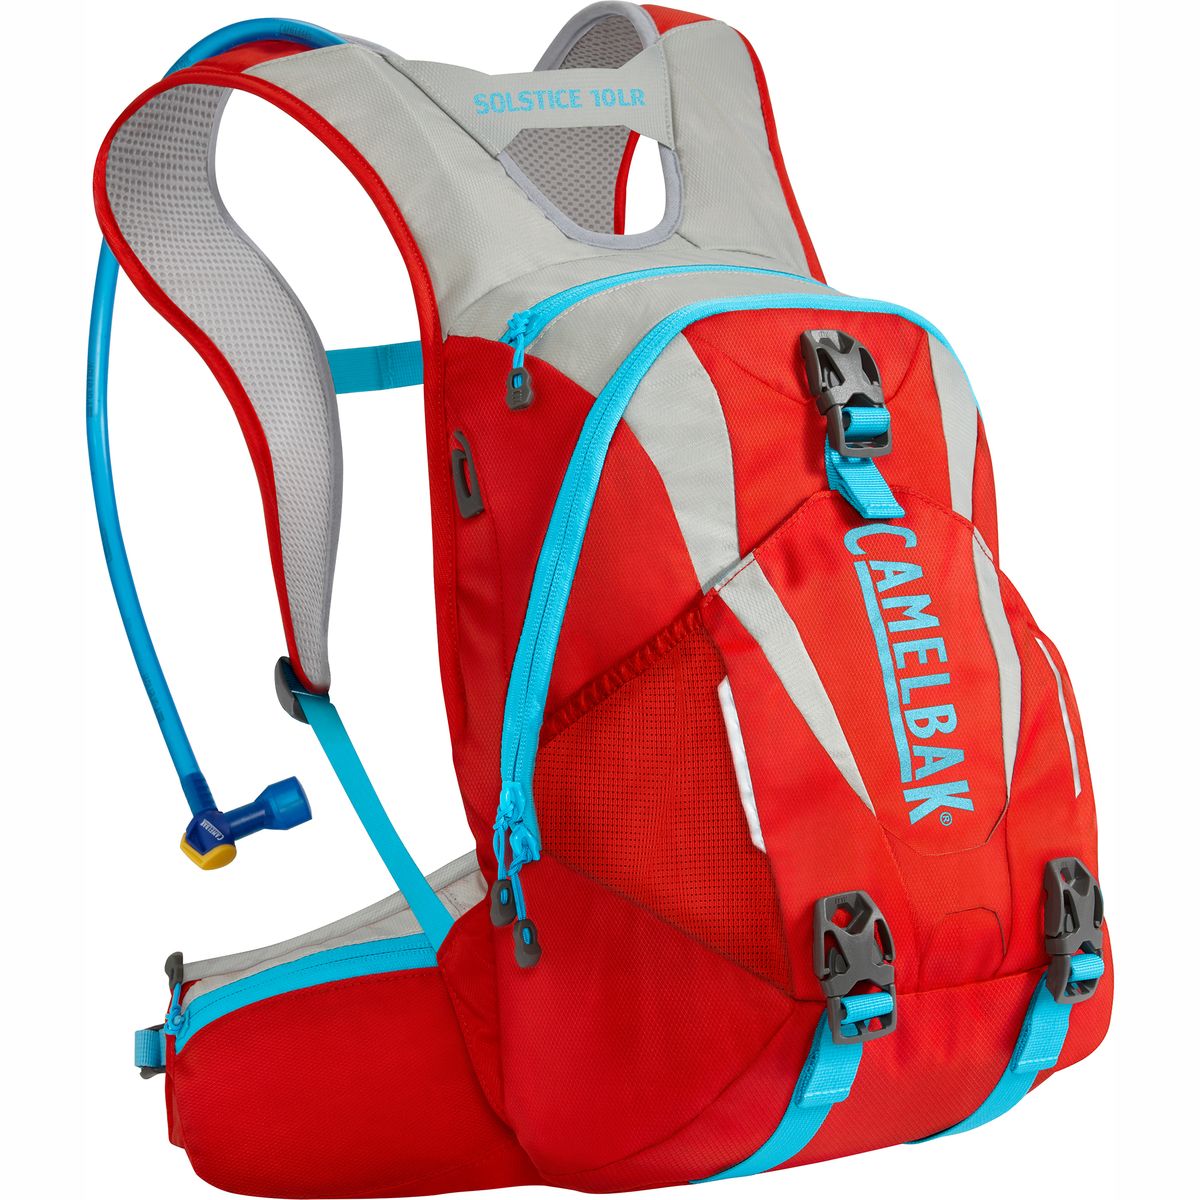 CamelBak Solstice 10 LR Hydration Backpack 610cu in